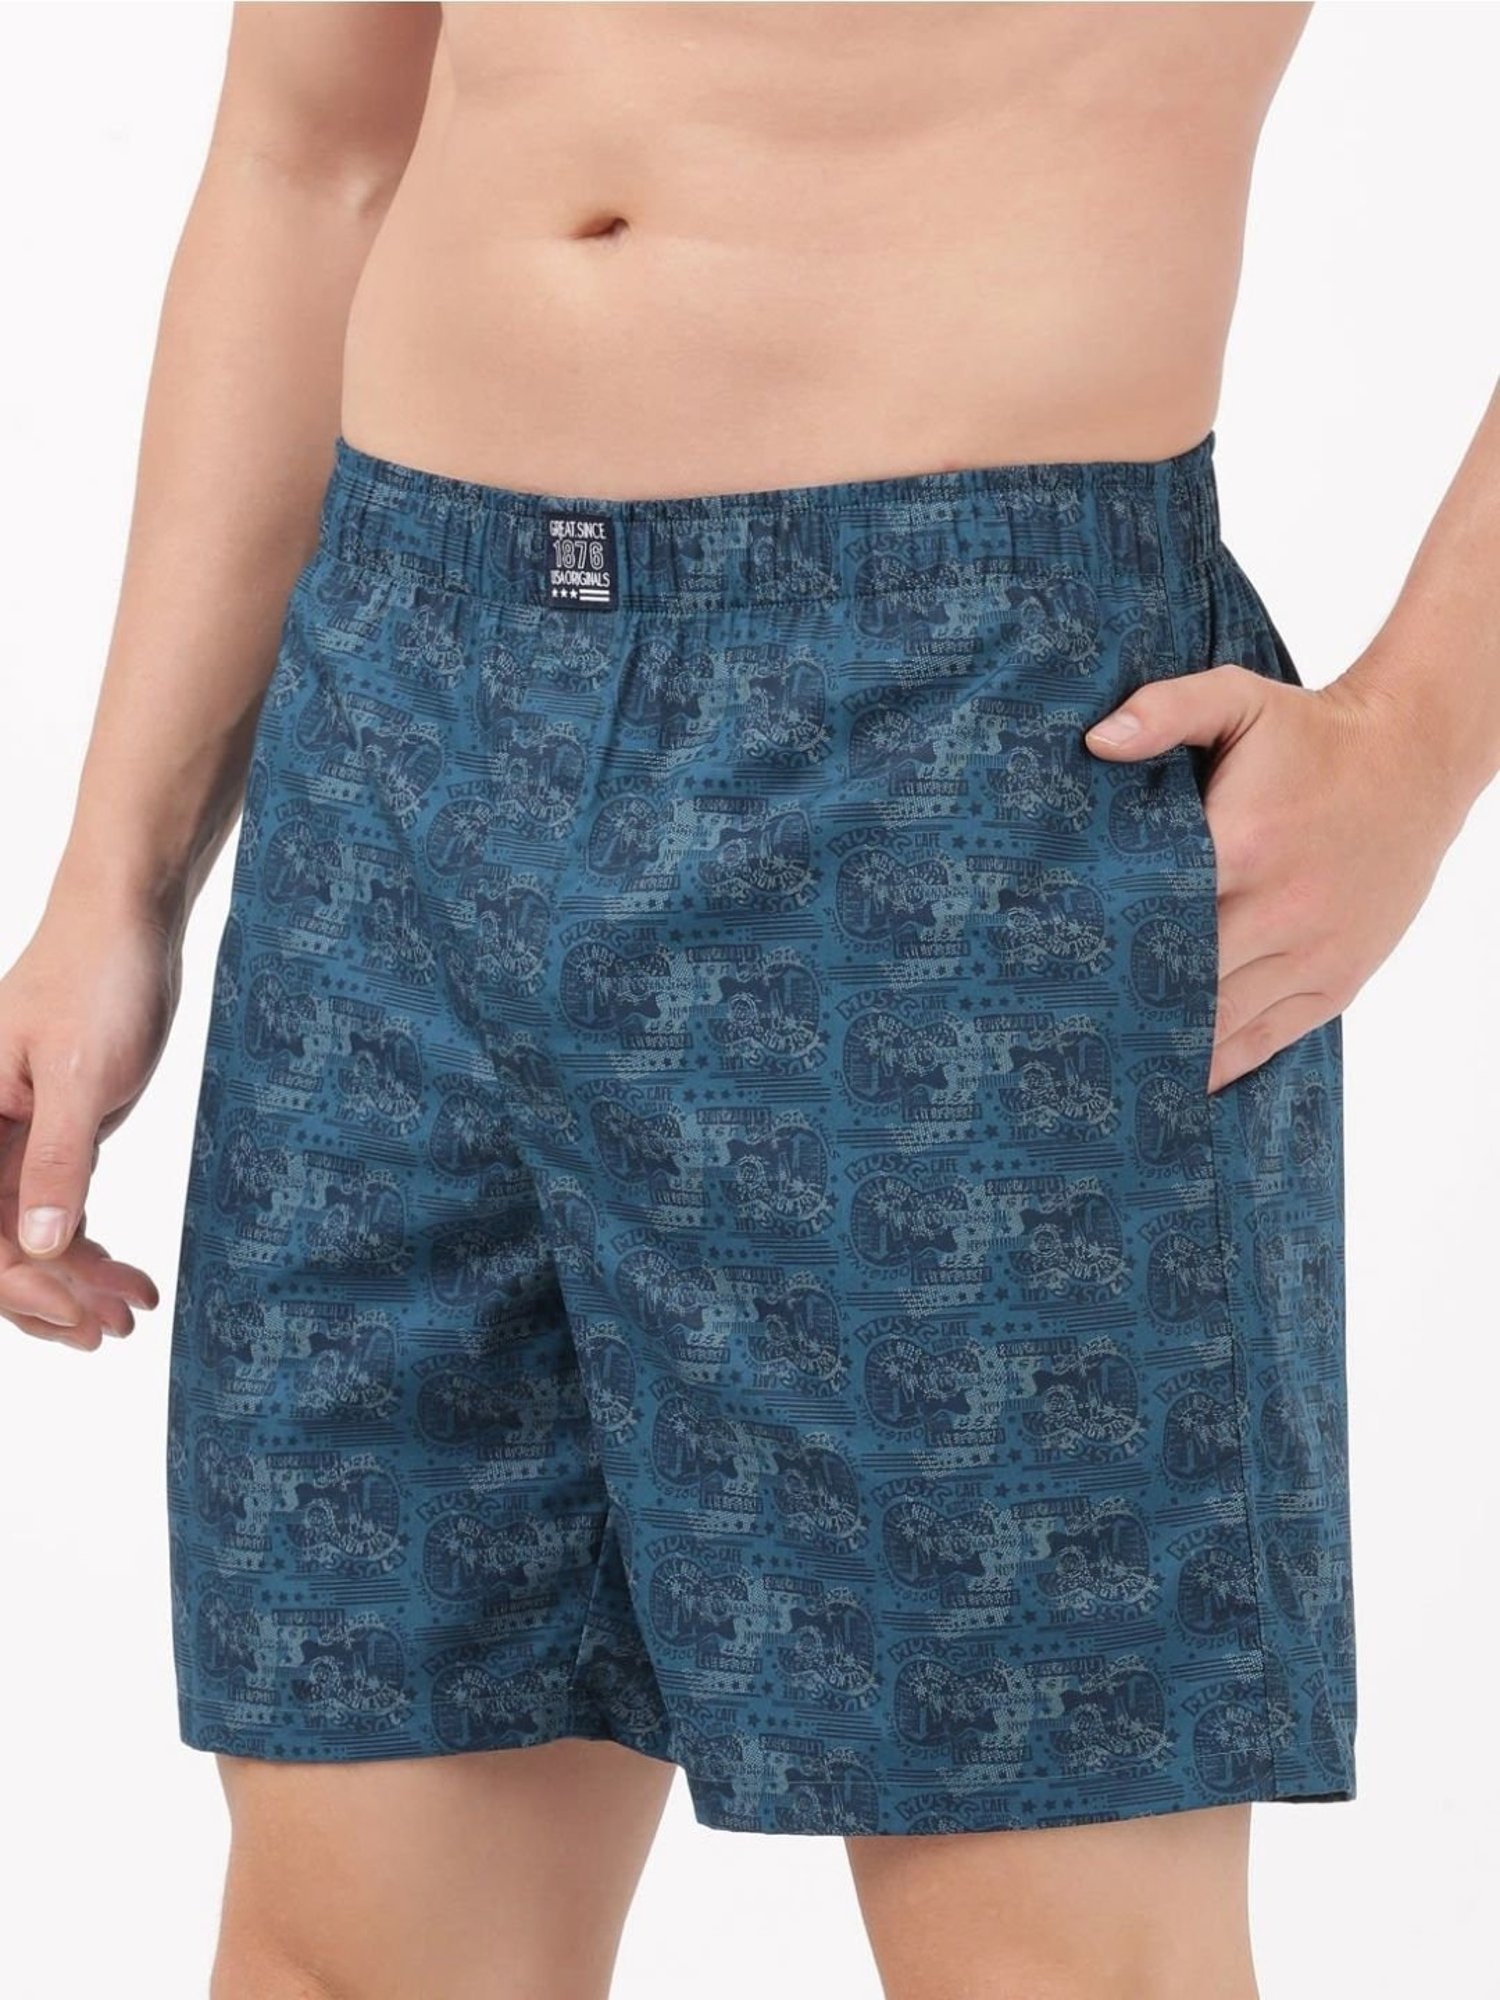 Buy Jockey Multi Cotton Comfort Fit Printed Boxers for Mens Online @ Tata  CLiQ